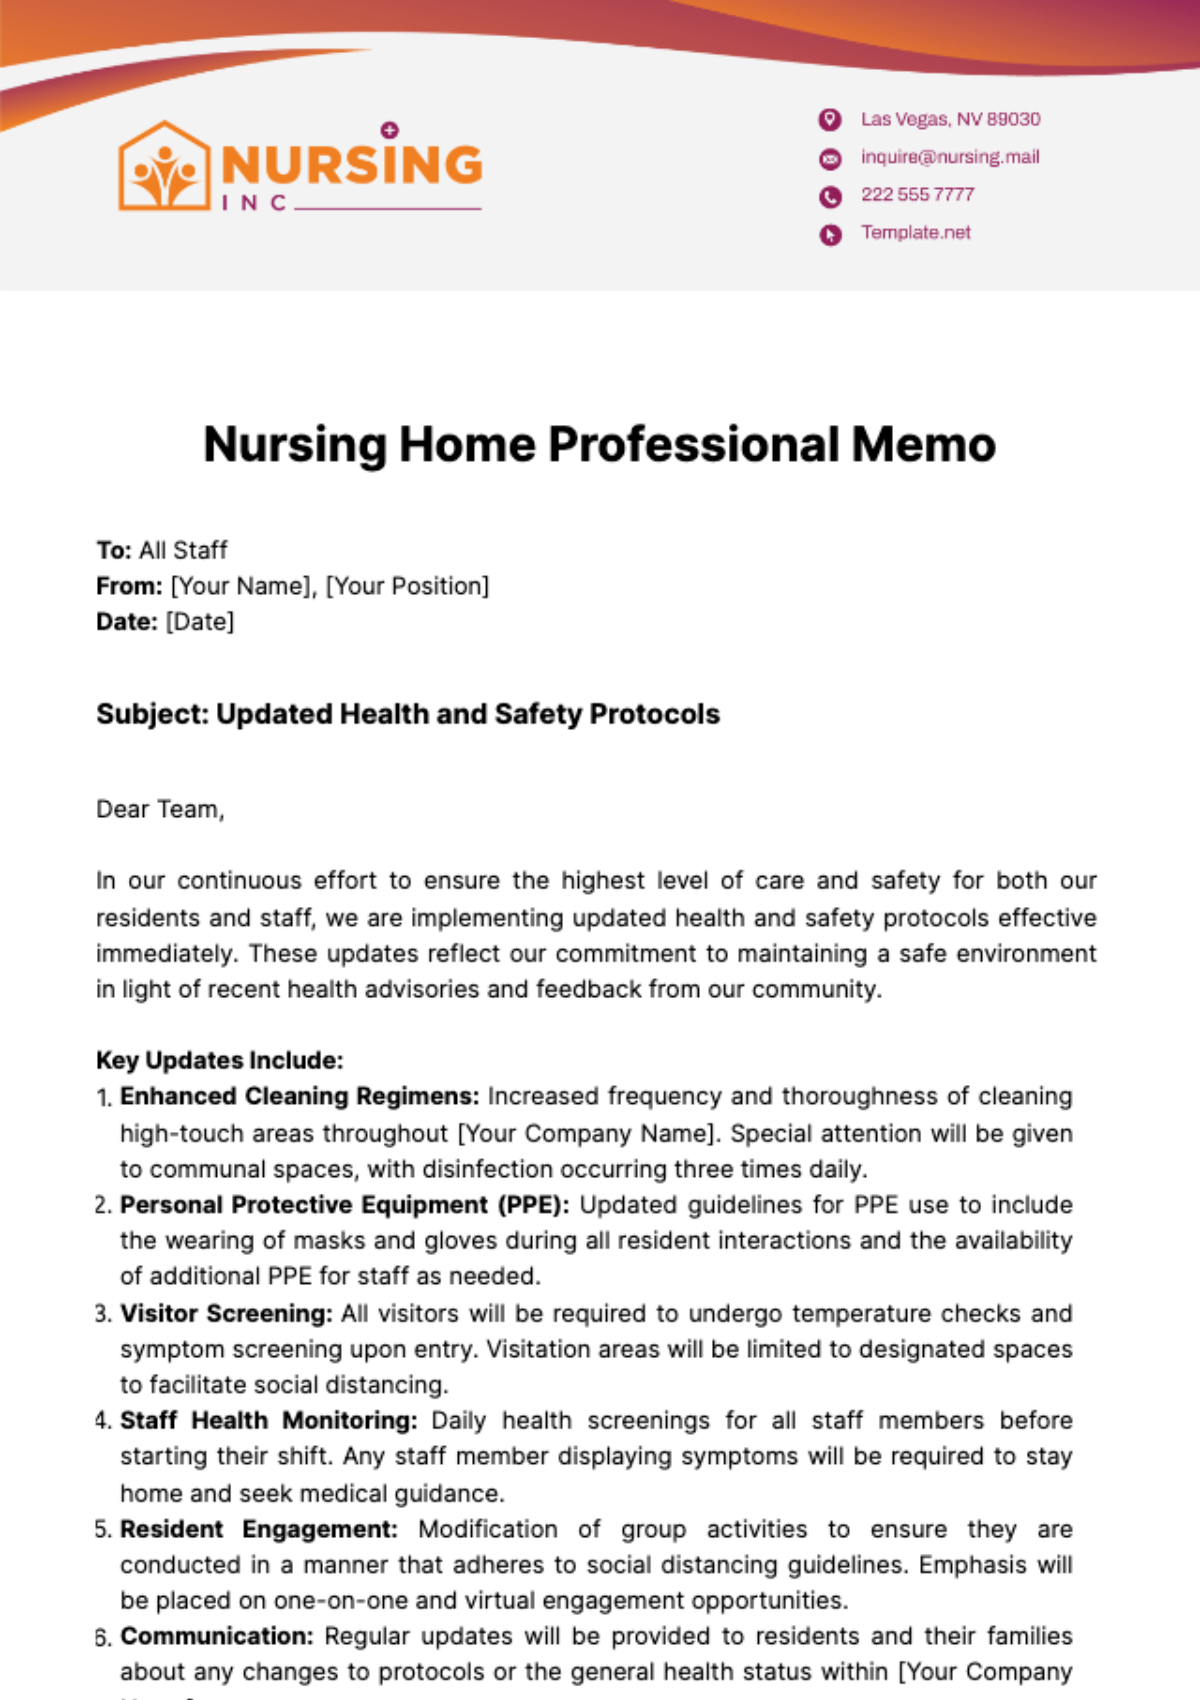 Nursing Home Professional Memo Template